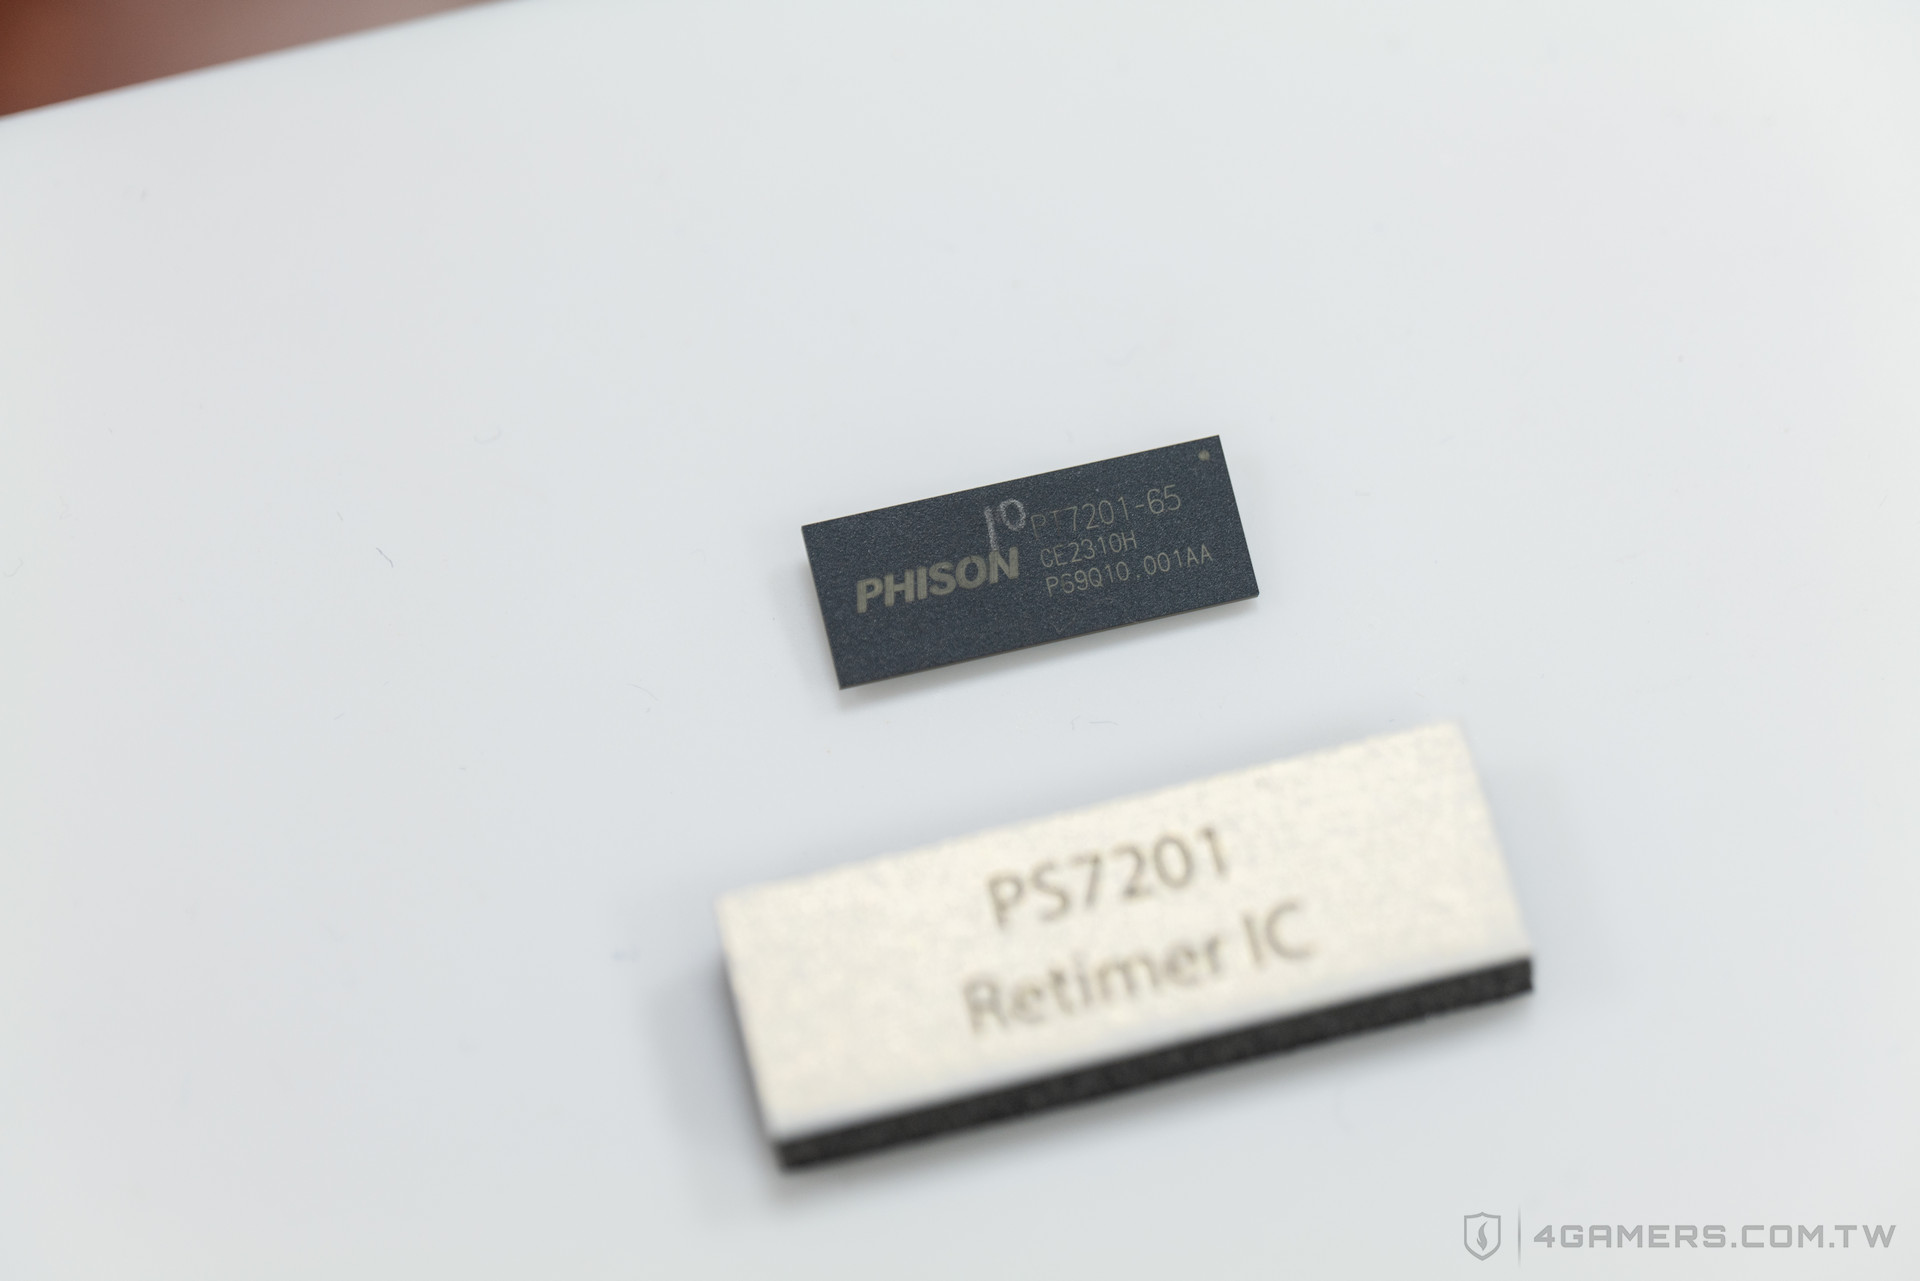 Phison PCIe 5.0 Retimer IC